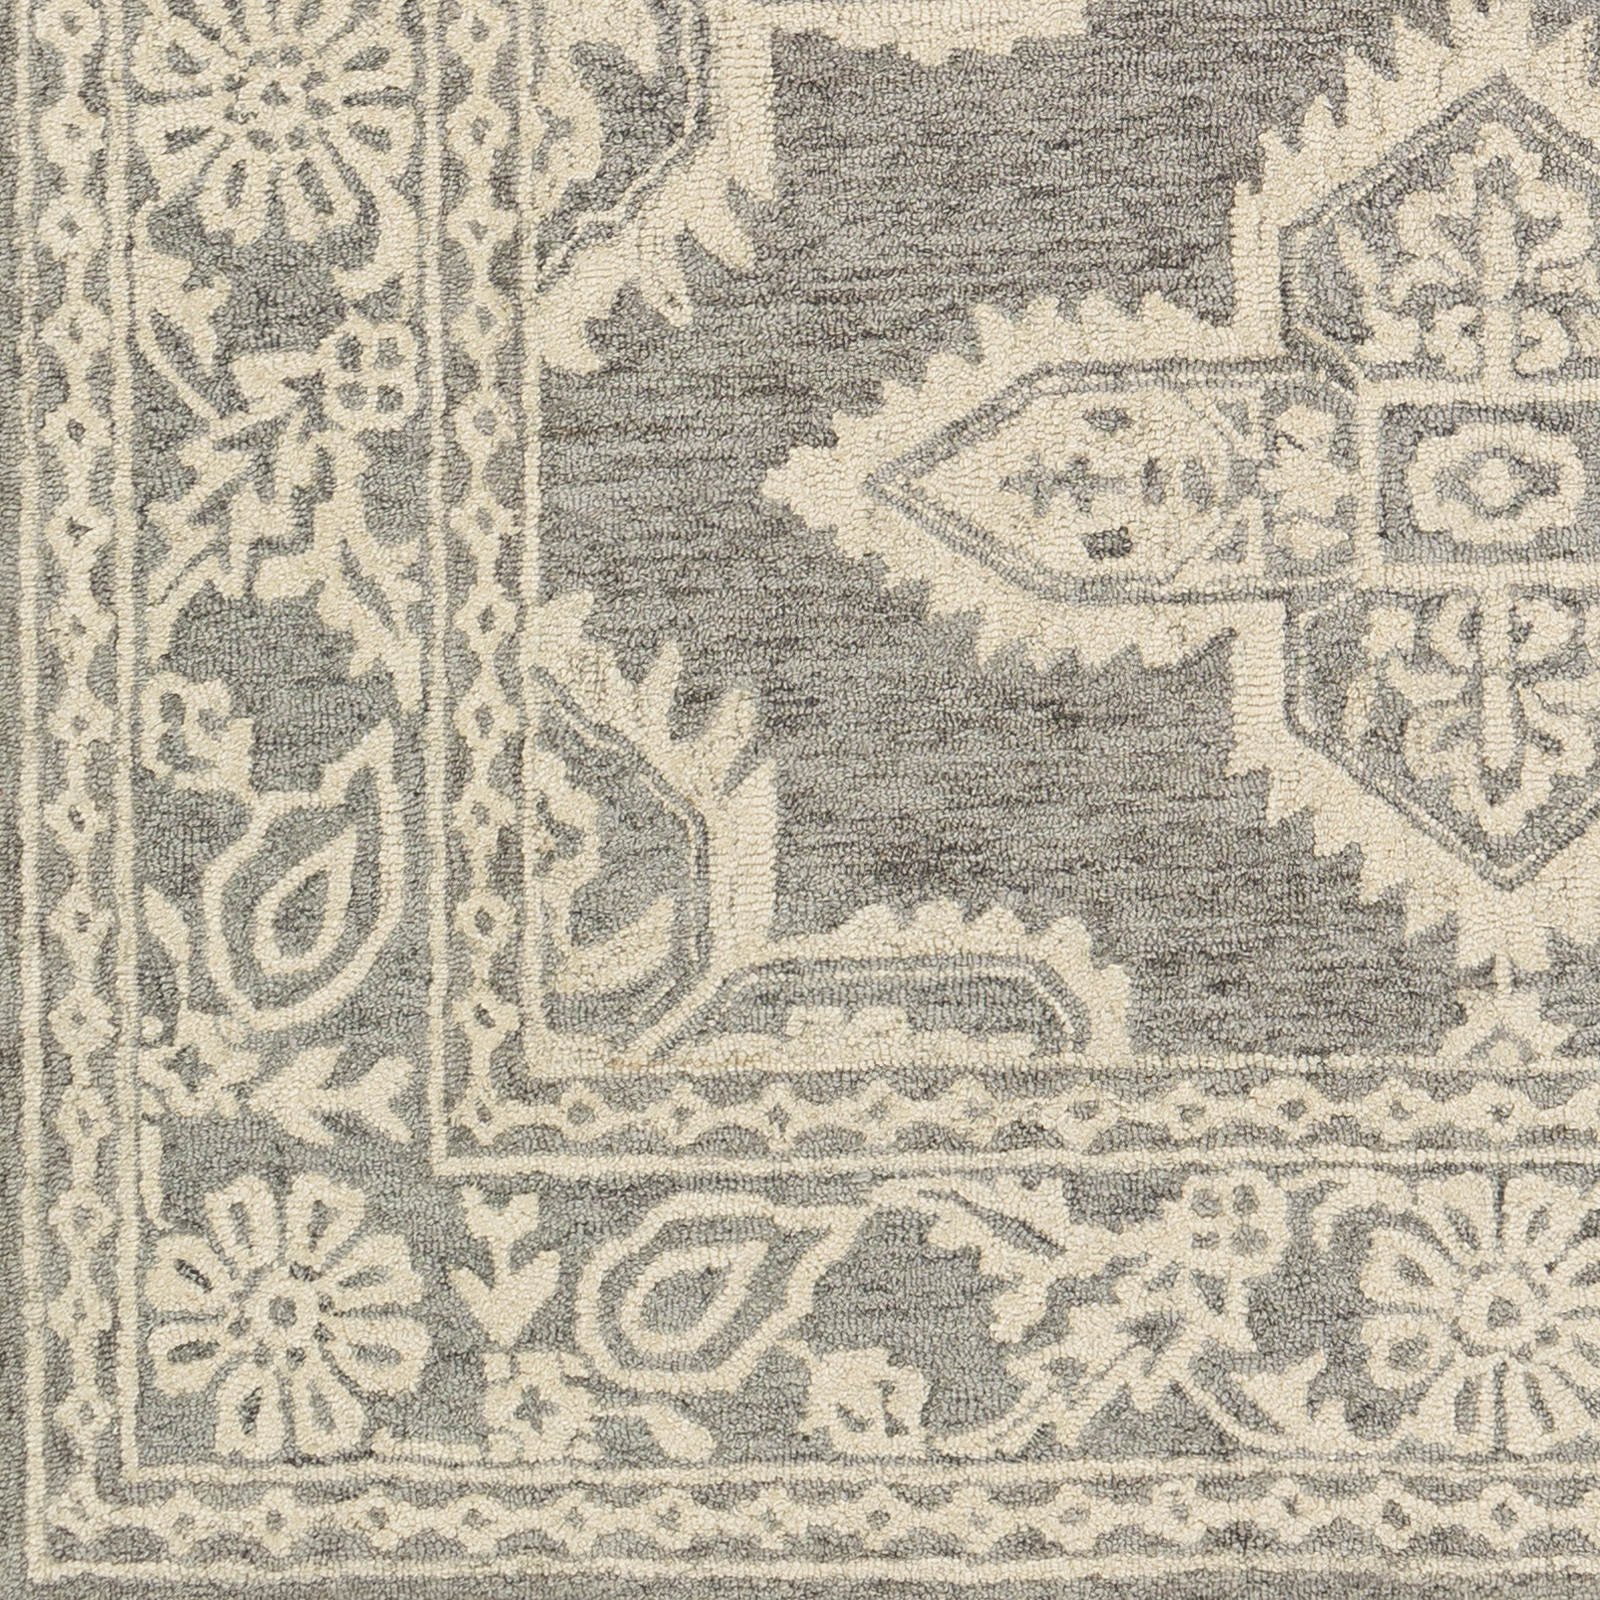 Granada Rug, 4' x 6' - Image 5